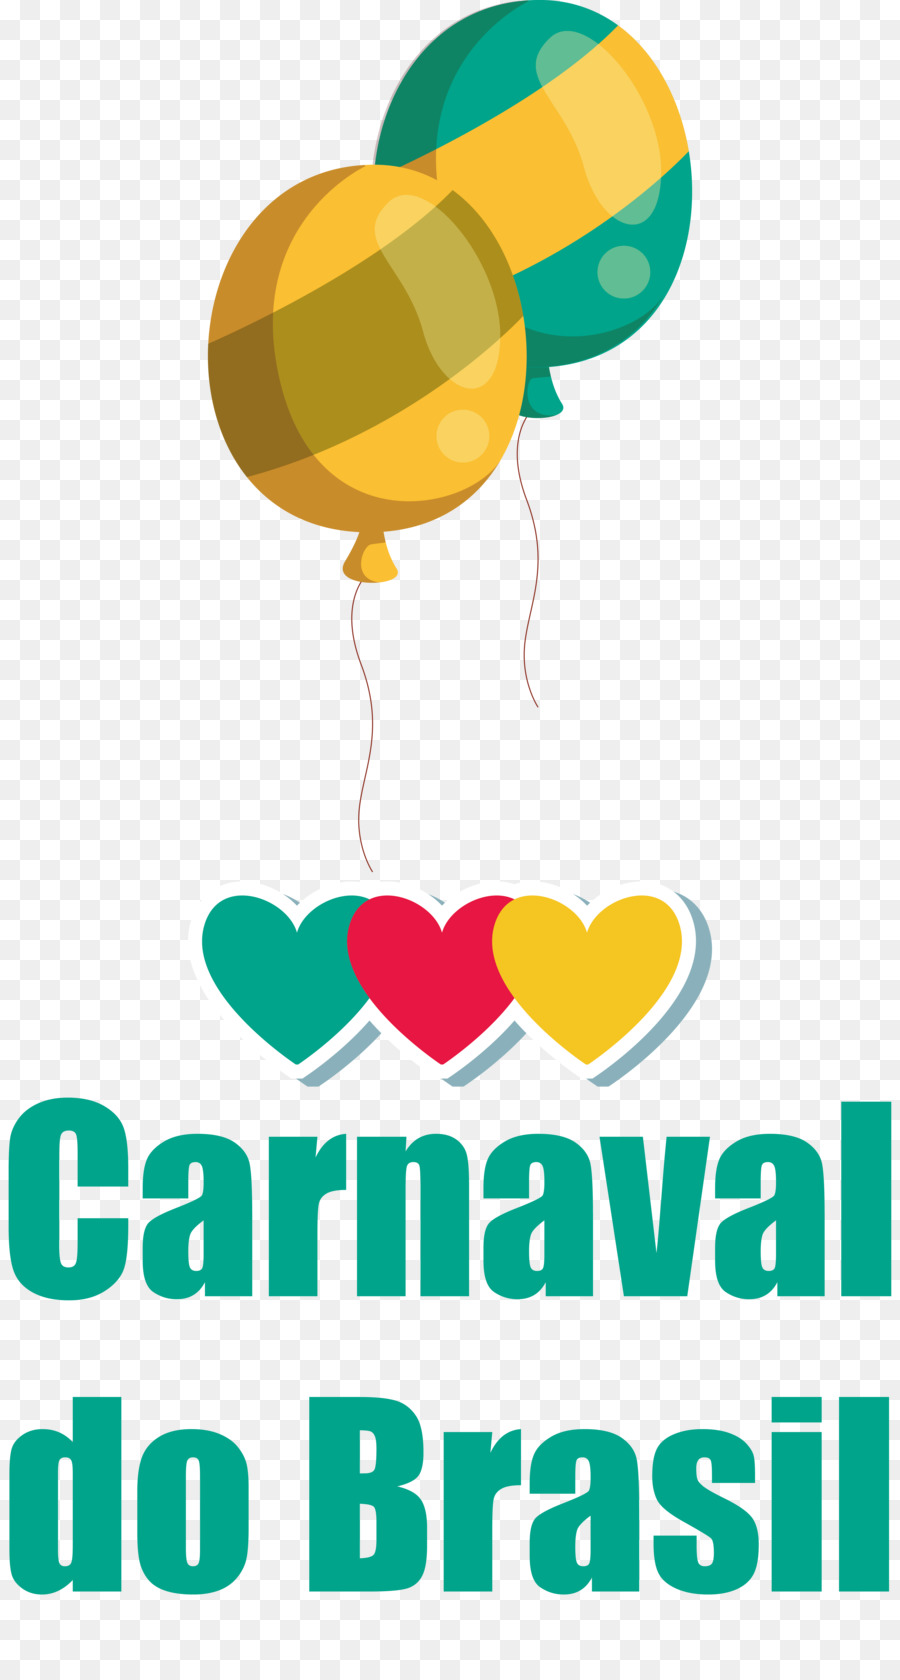 human balloon party behavior brazil port terminal